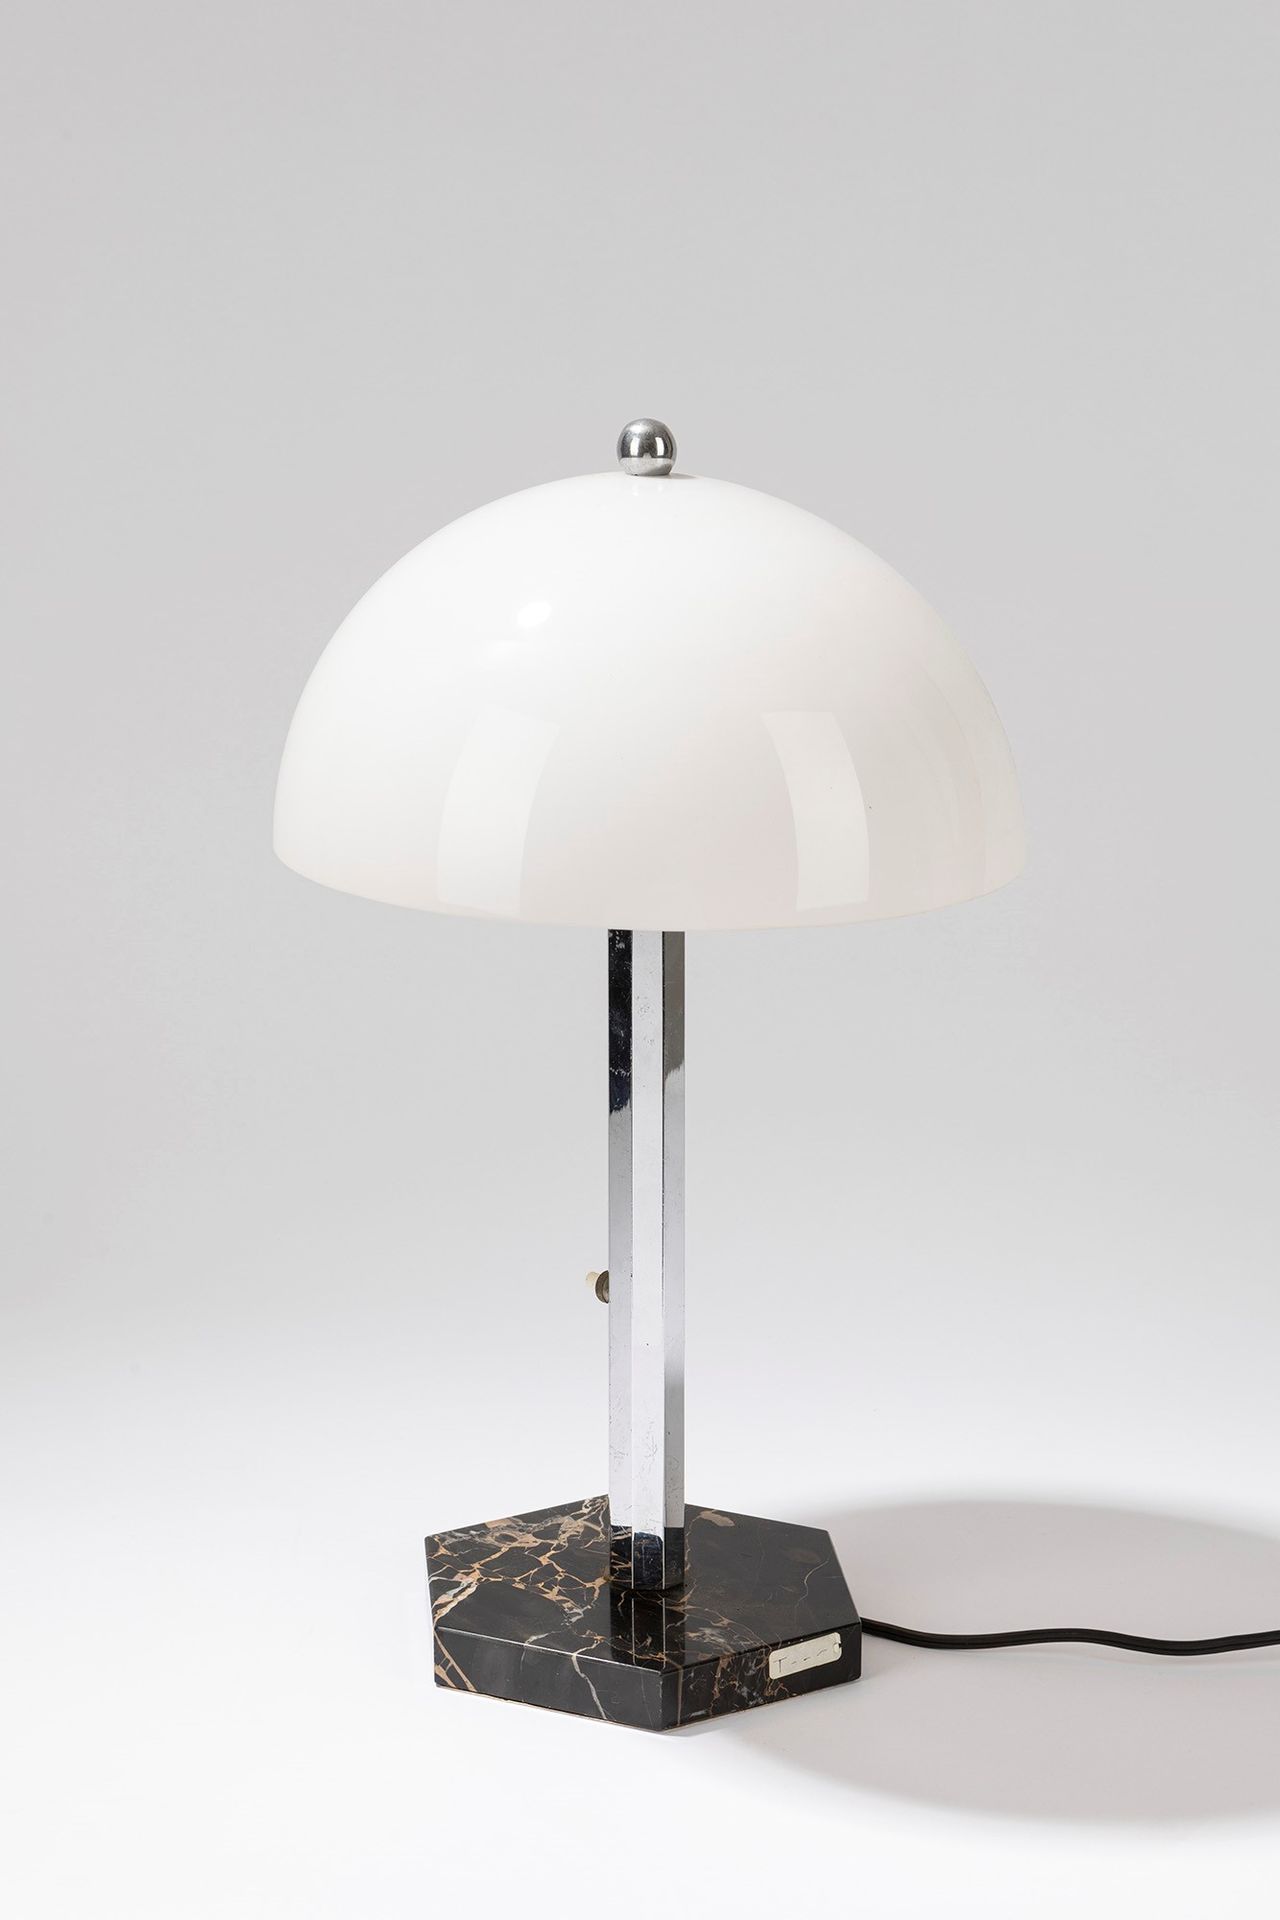 ITALIAN MANUFACTURE 台灯，40年代

dm cm 25 x42,5 h
六角形大理石底座，铬金属杆，白色玻璃扩散器。